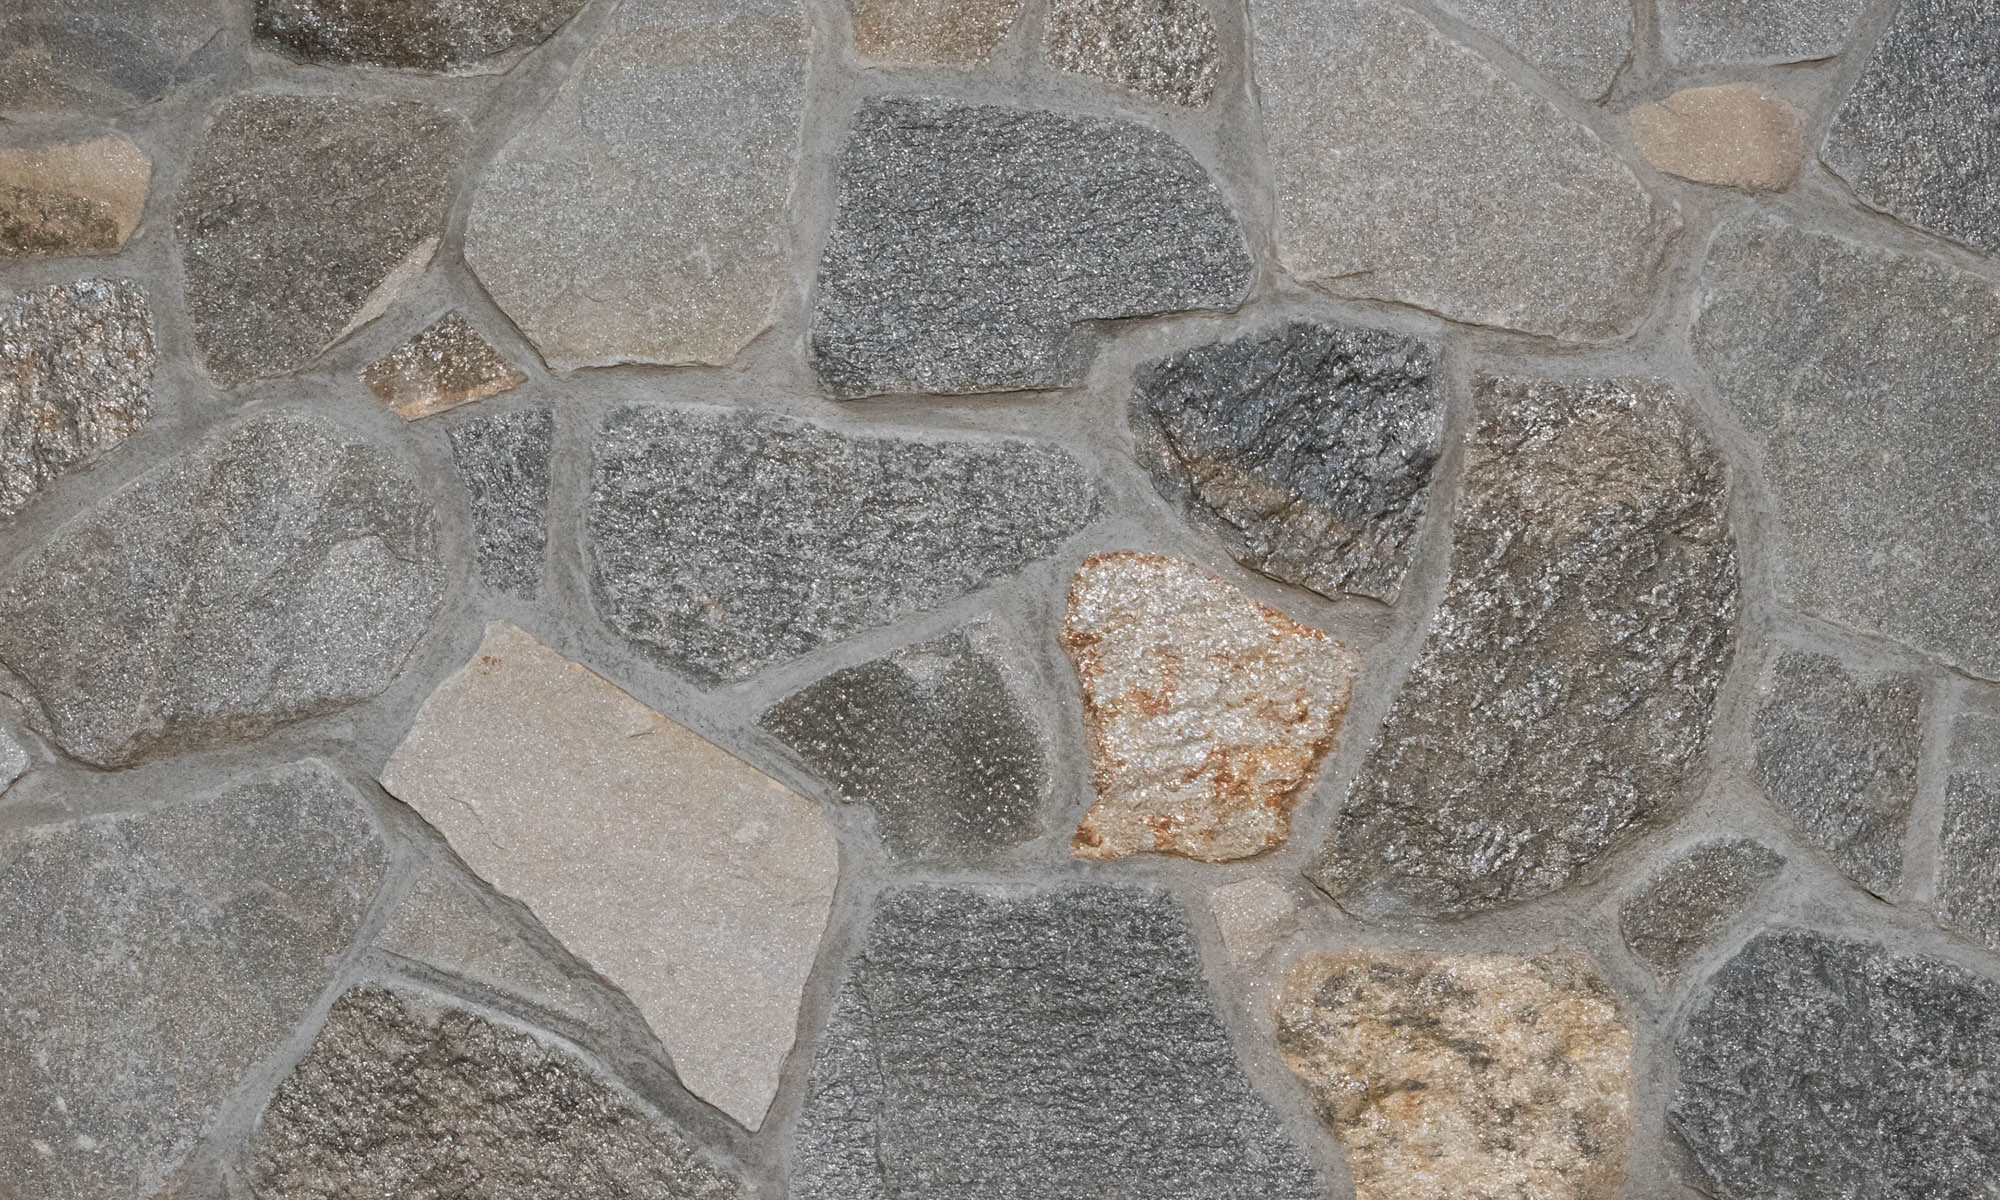 Pangaea® Natural Stone – Fieldstone, Sierra Ridge avec demi pouce joints de mortier